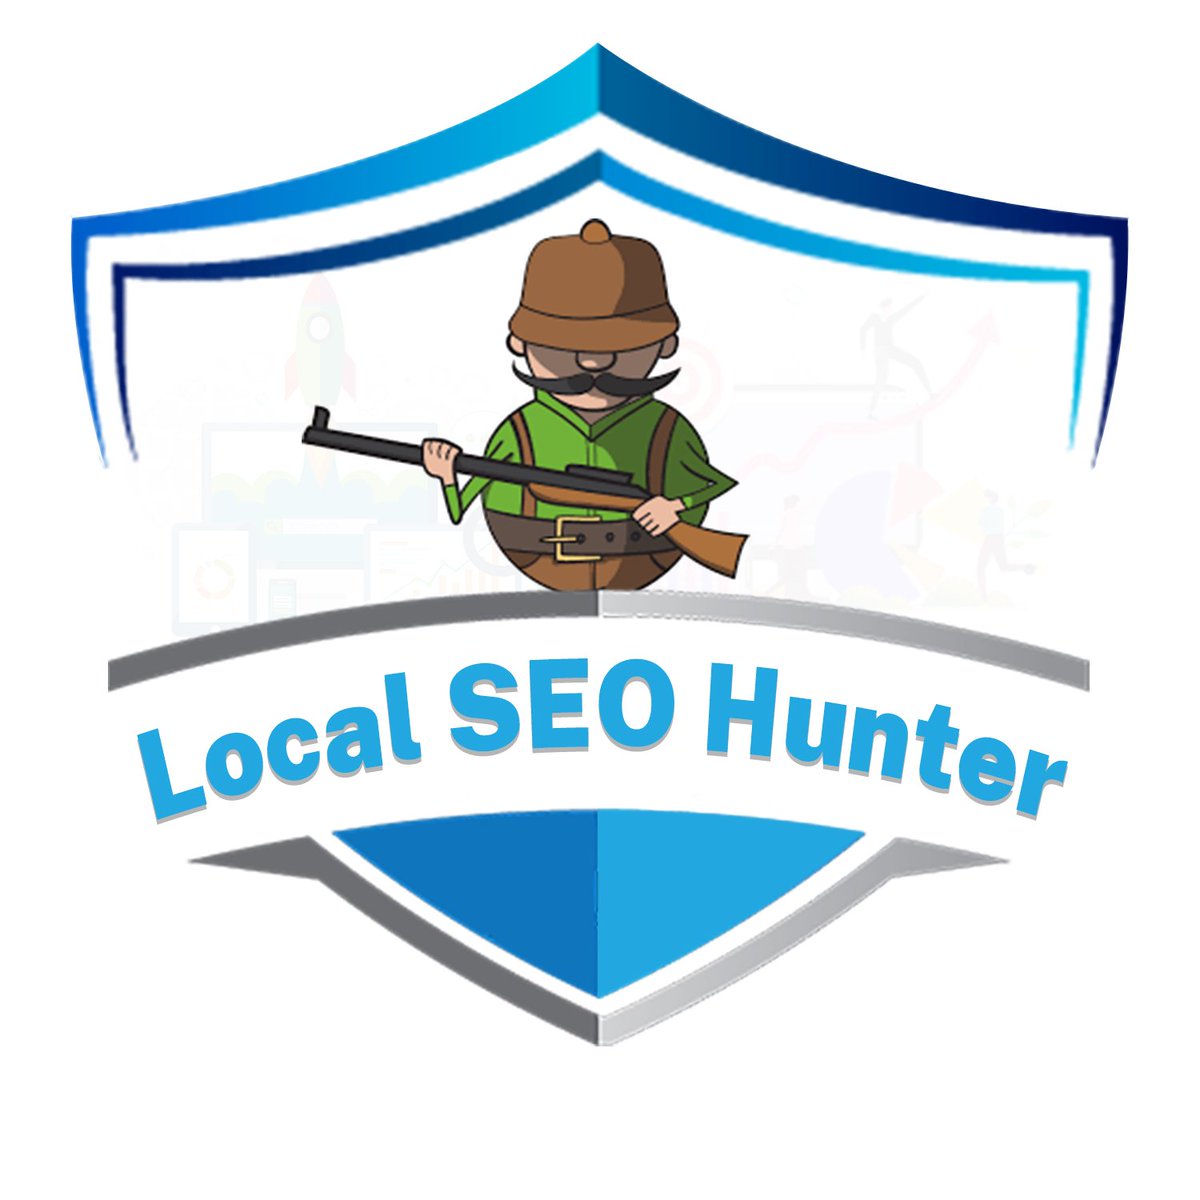 #Seo Hunter - marketingsharks.com/seo-hunter/ 
marketingsharks.com/wp-content/upl… 
#LocalSeo #SeoForLocalBusinesses #SEOHunter #SEOHunterBonus #SEOHunterReview